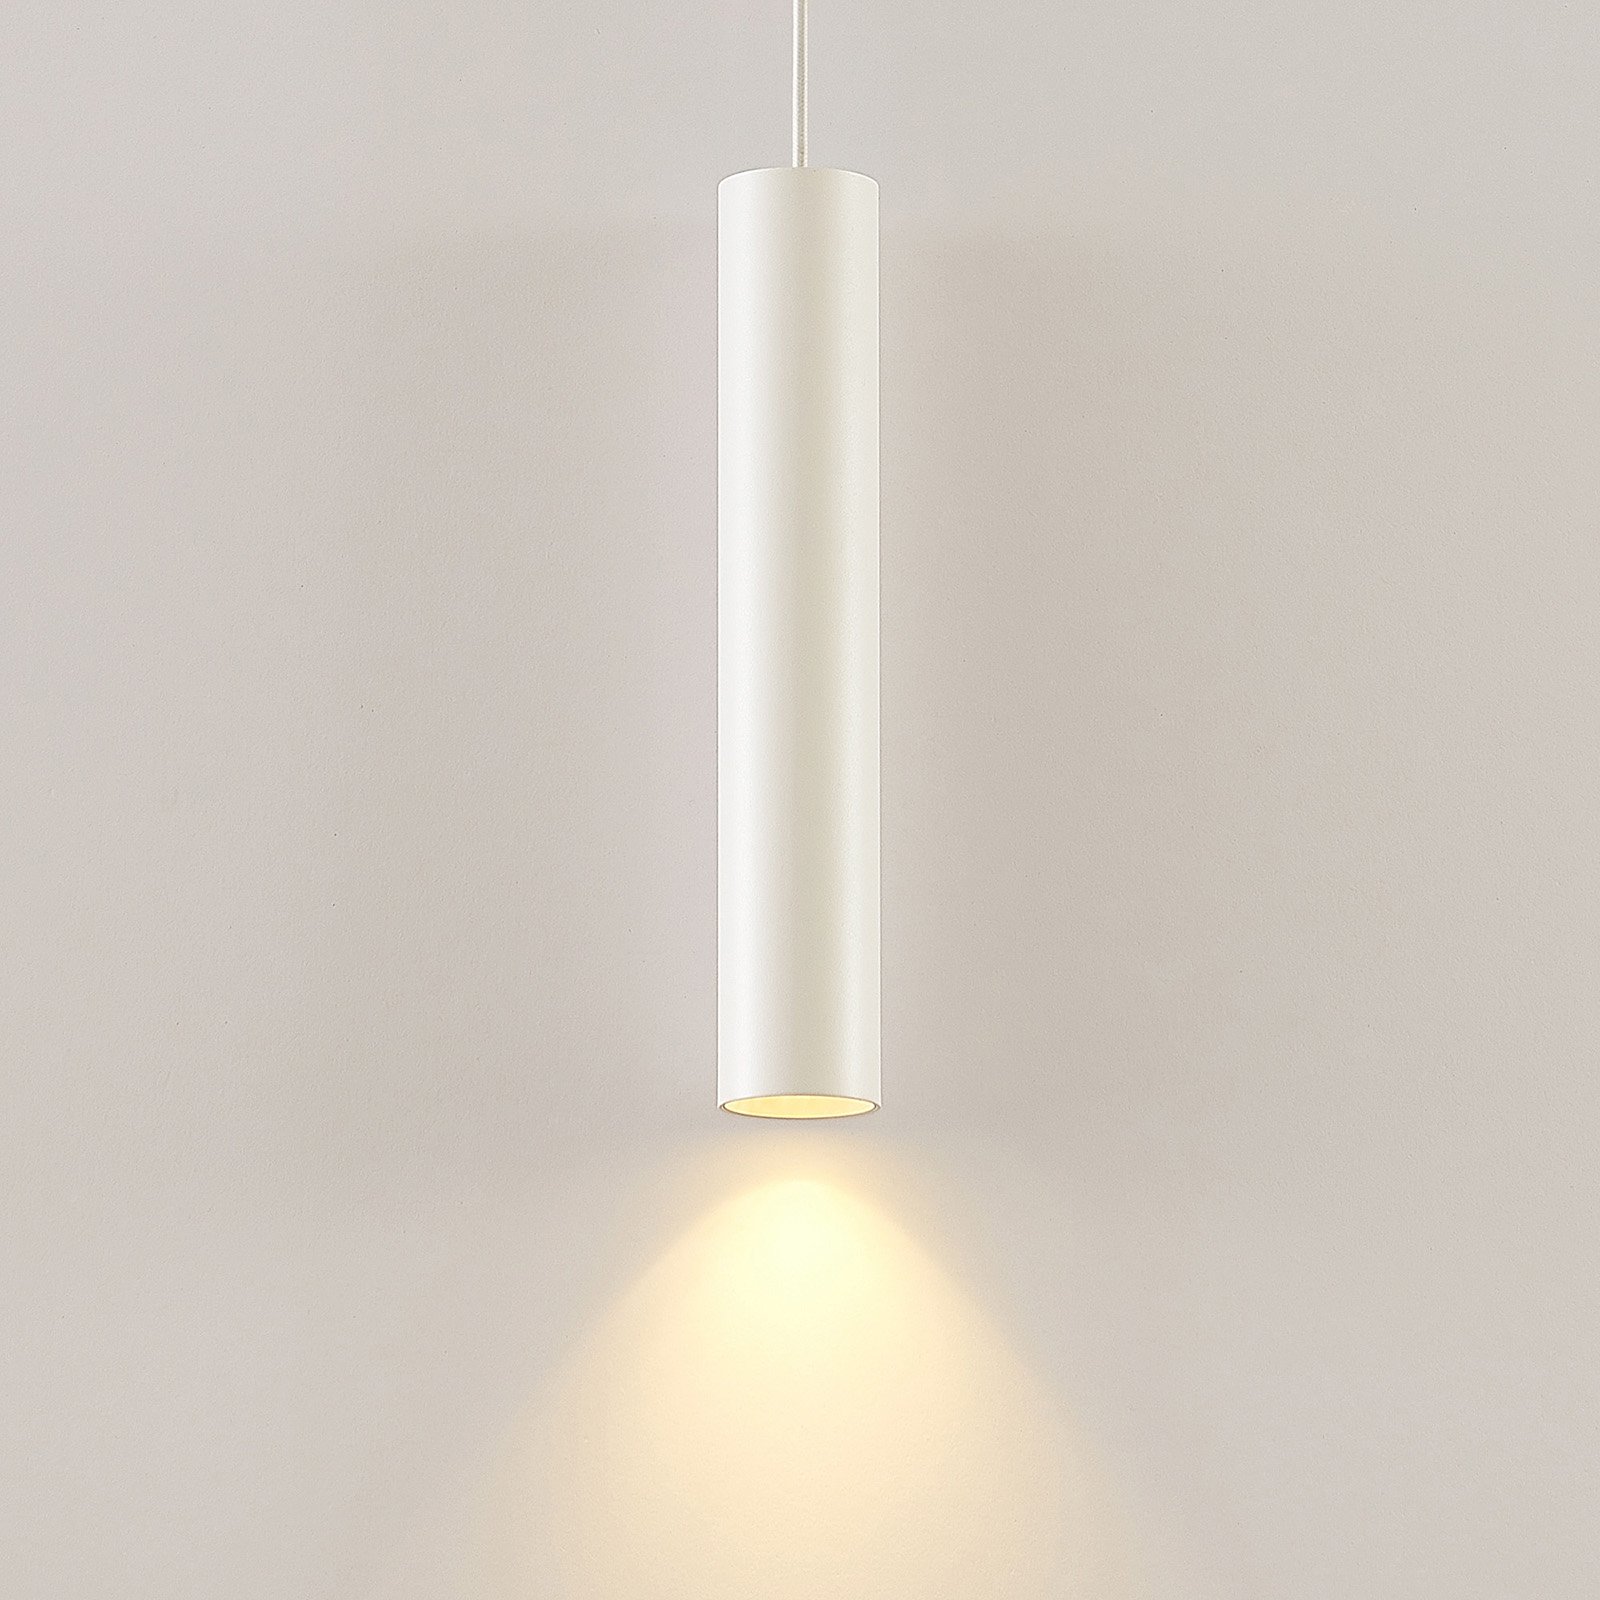 Arcchio Ejona függő lámpa, 35 cm magas, fehér